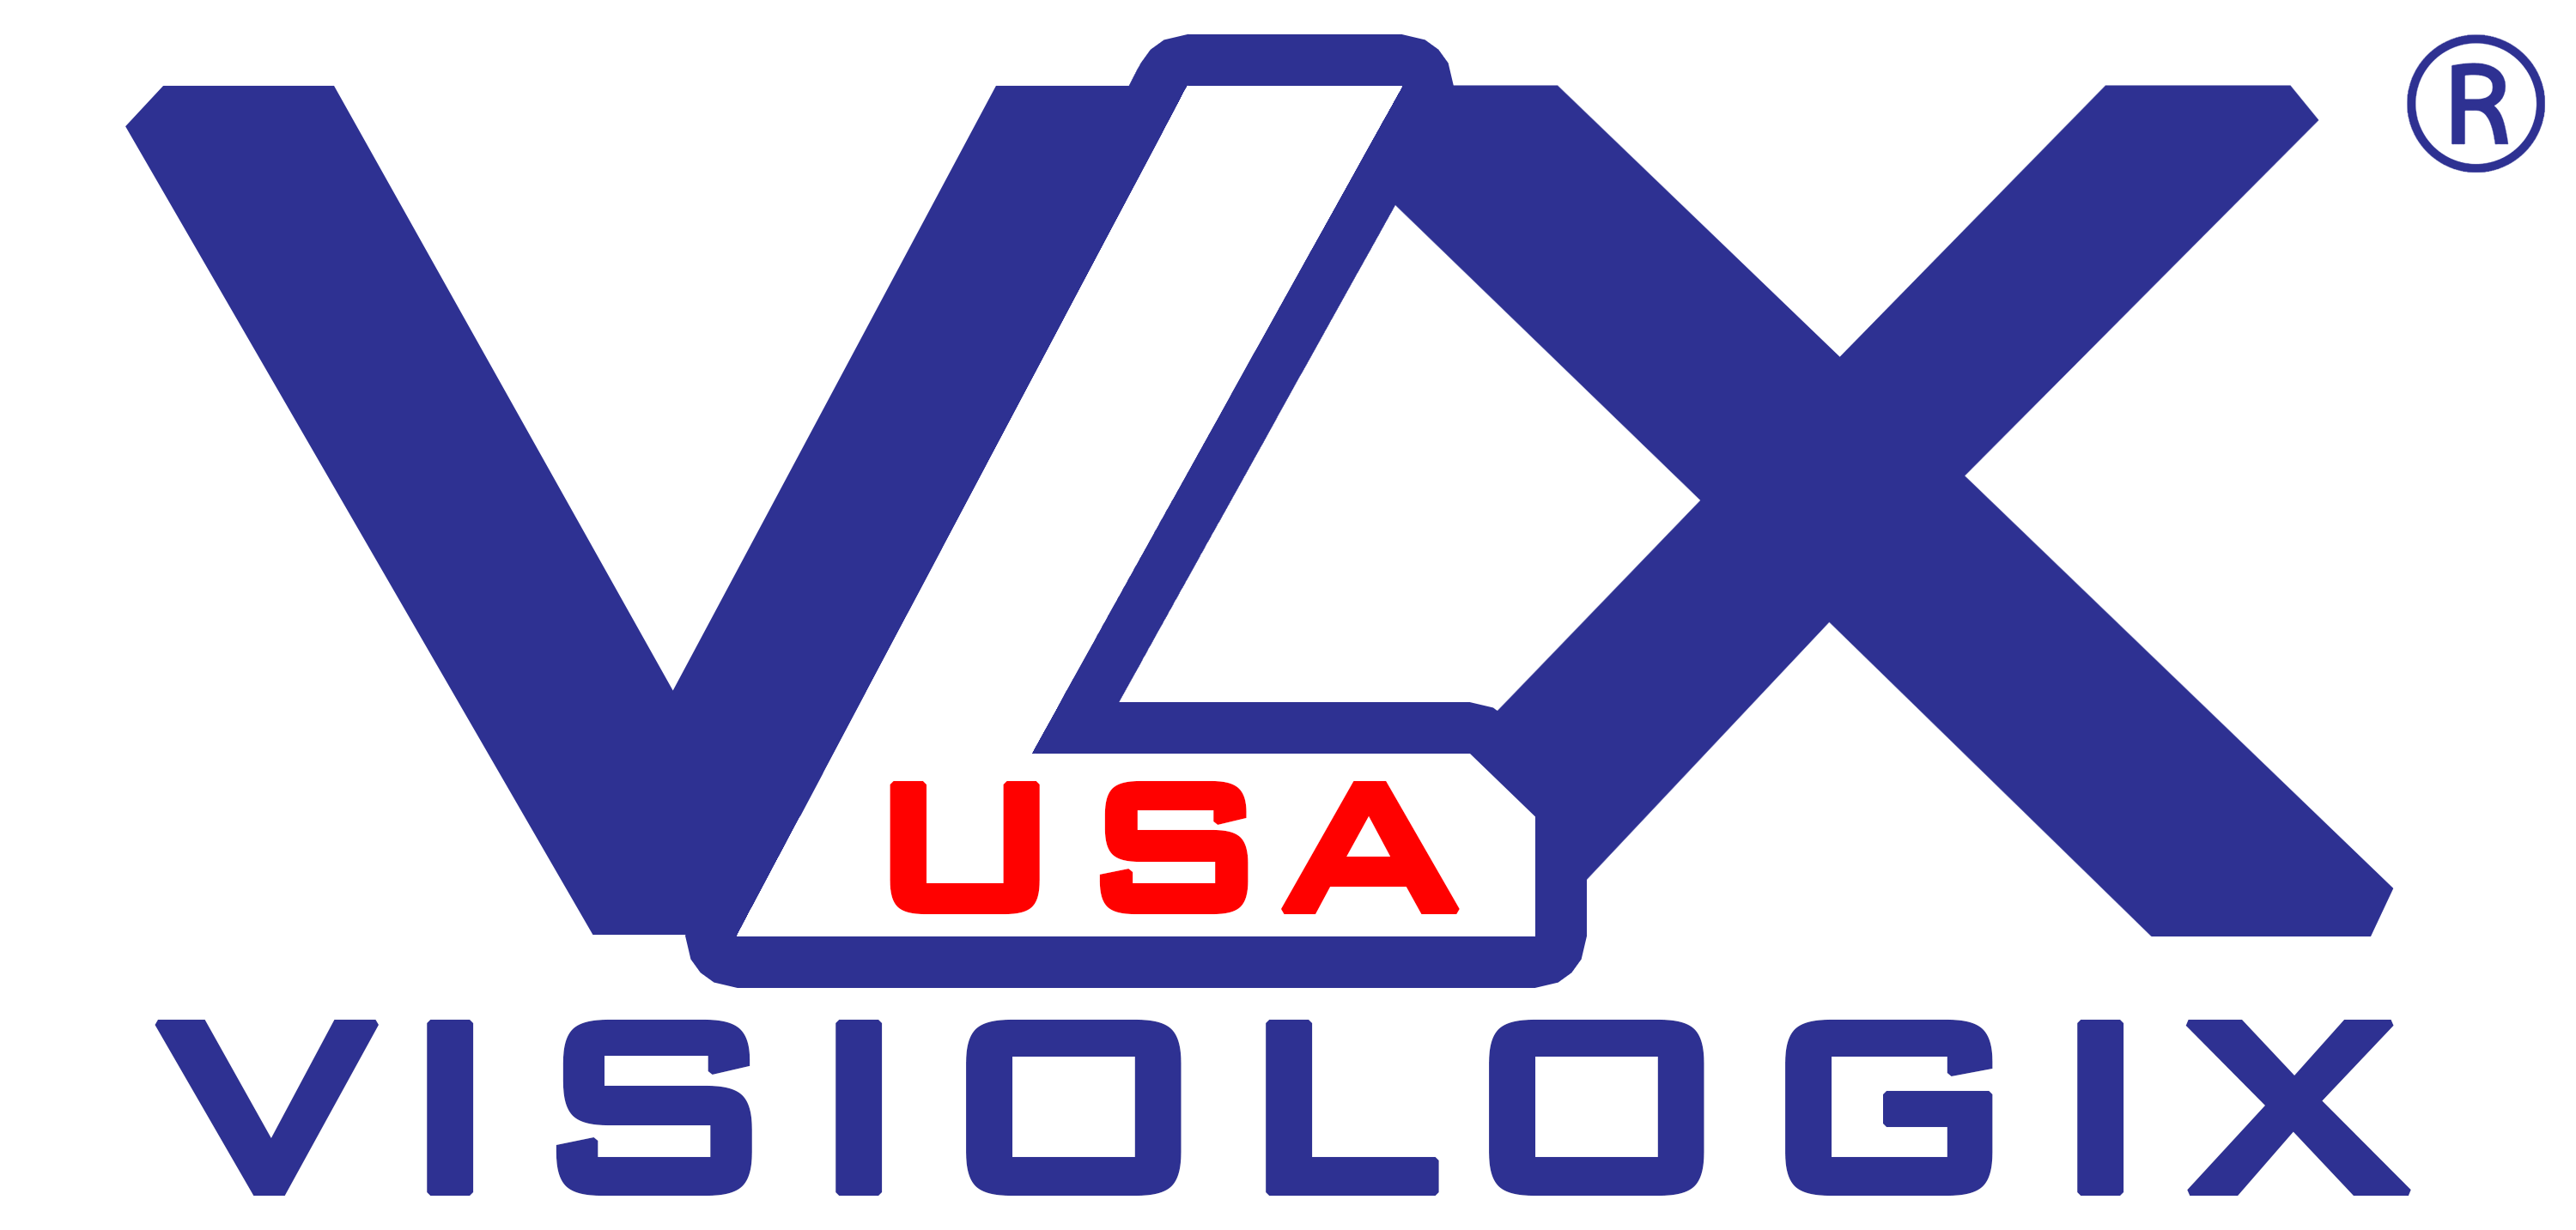 Visiologix Corporation January 2023 Announcement